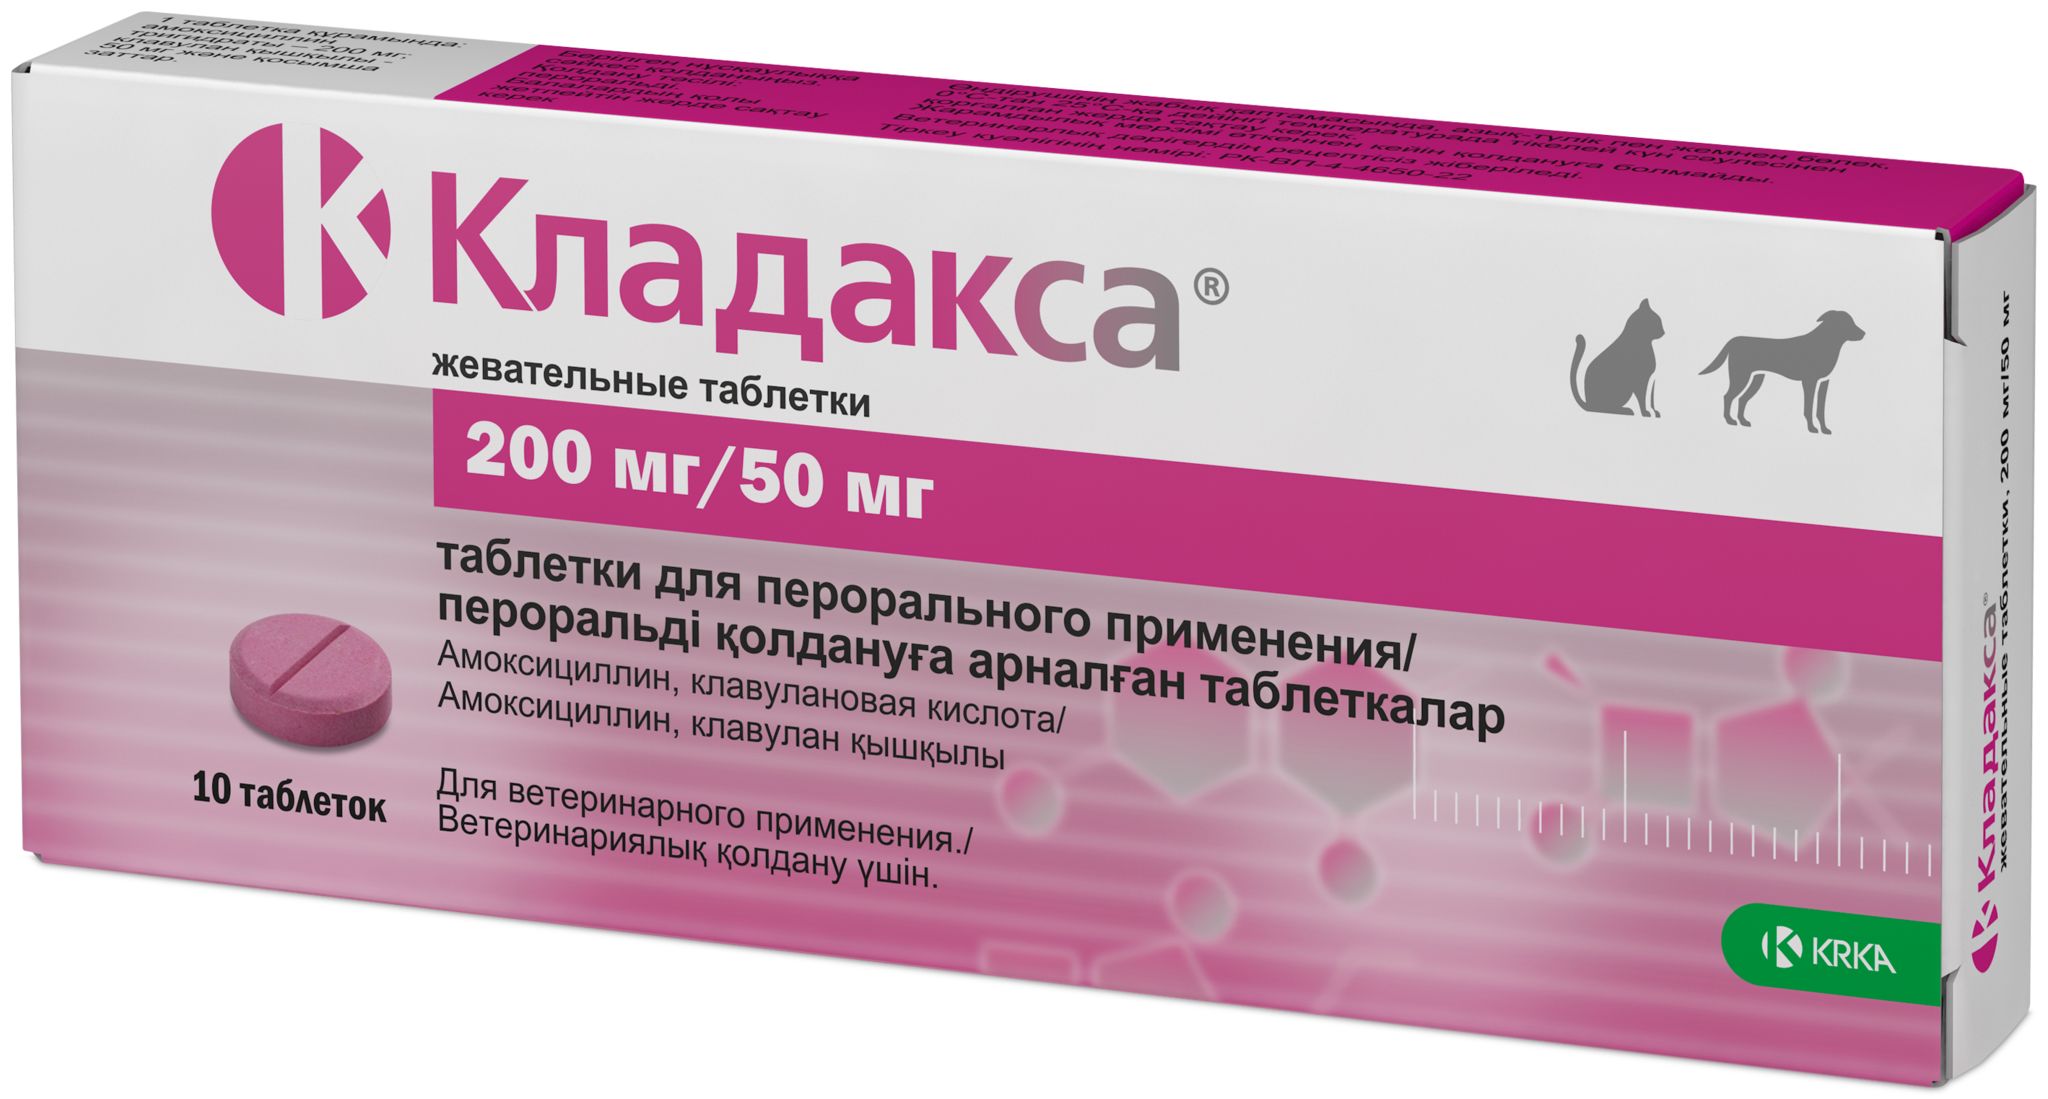  Кладакса 200мг/50мг жевательные таблетки уп 10таб для питомцев
